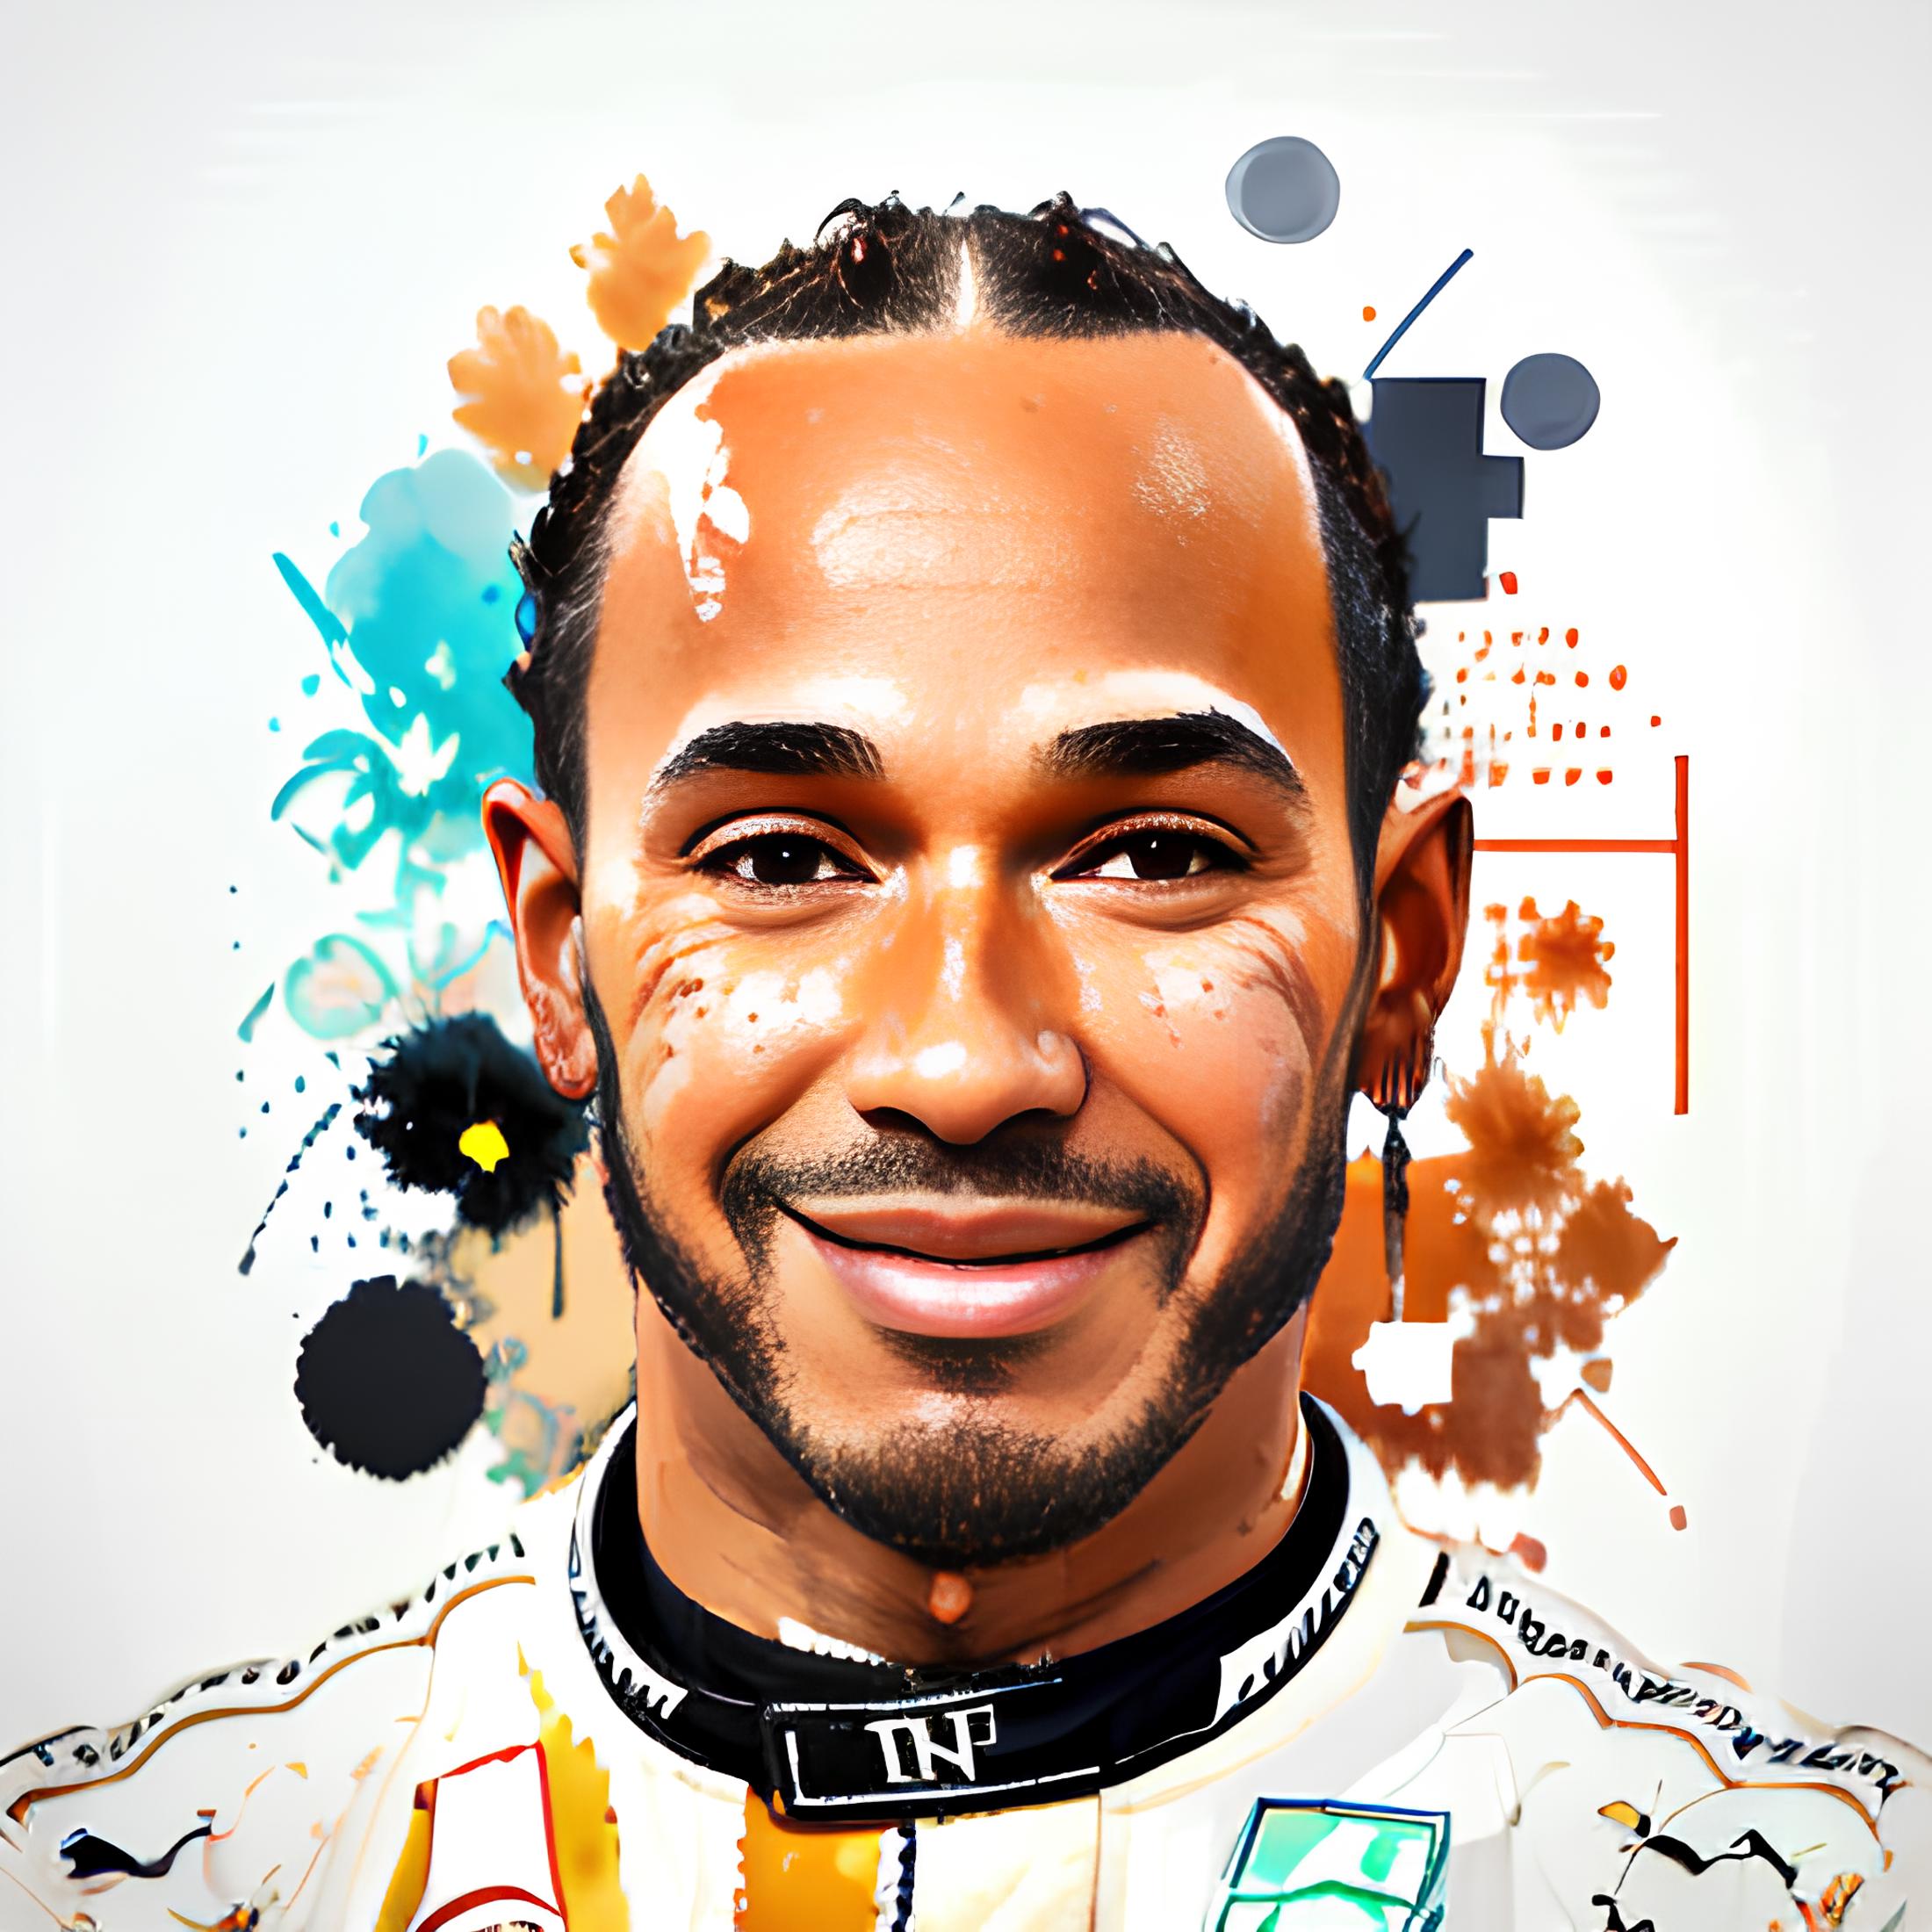 Lewis Hamilton LORA image by mv20